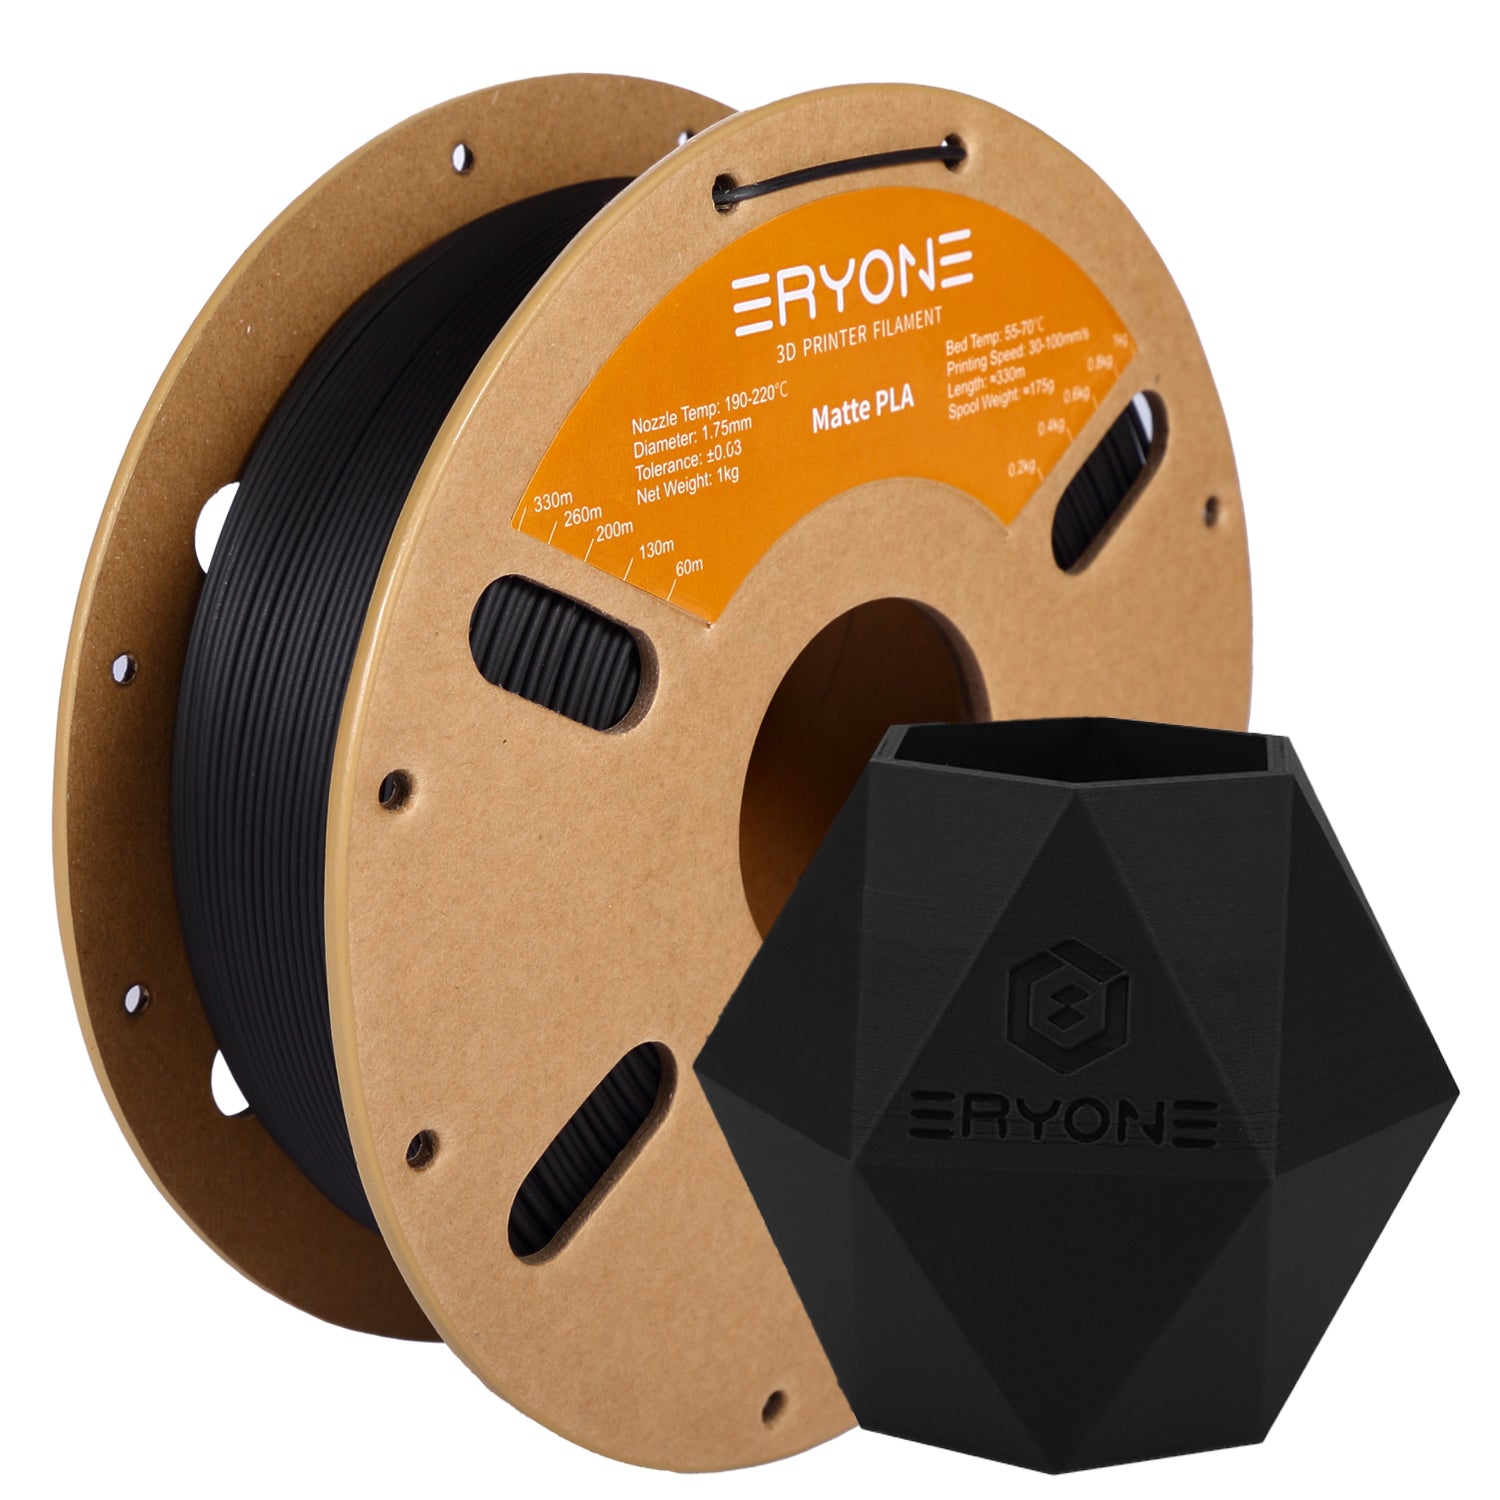 ERYONE Matte PLA / Hyper Speed Filament, 1.75mm Filament for 3D Printer, 1KG(2.2LBS)/ Spool